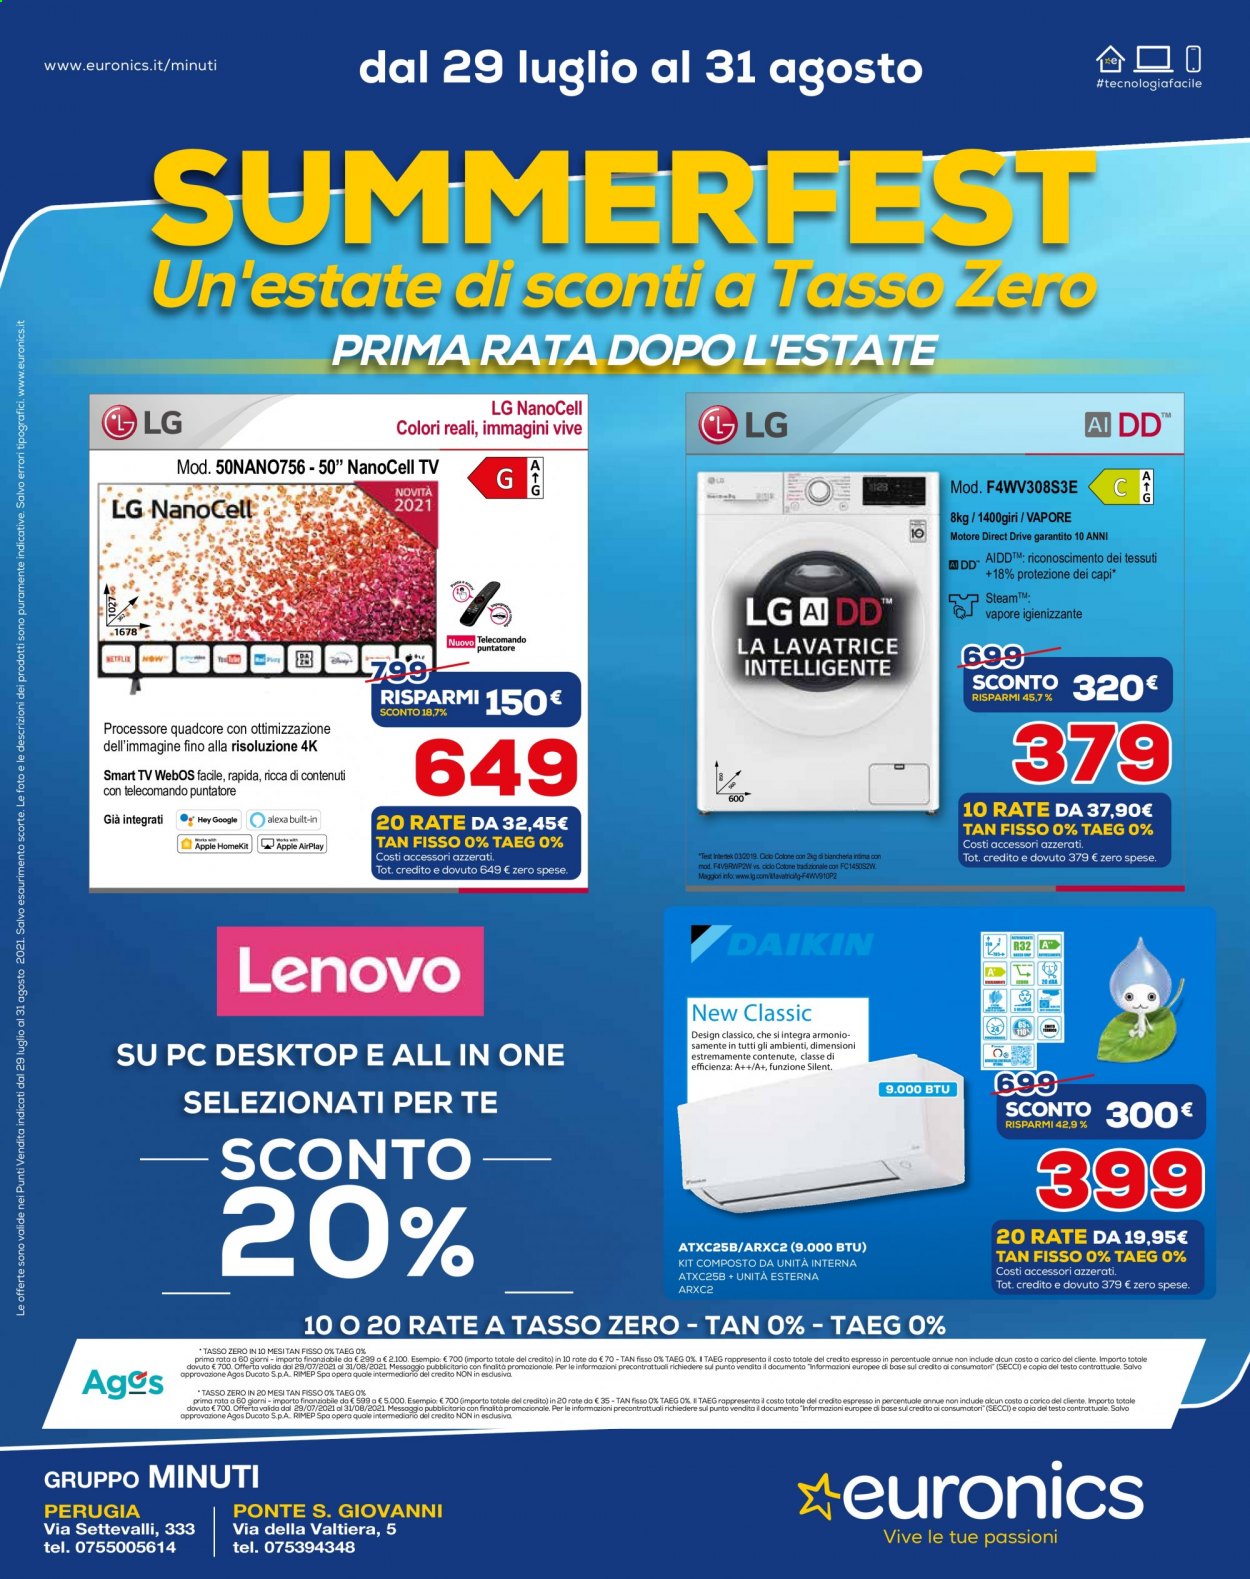 thumbnail - Volantino Euronics - 29/7/2021 - 31/8/2021 - Prodotti in offerta - LG, Lenovo, Smart TV, televisore, lavatrice. Pagina 1.